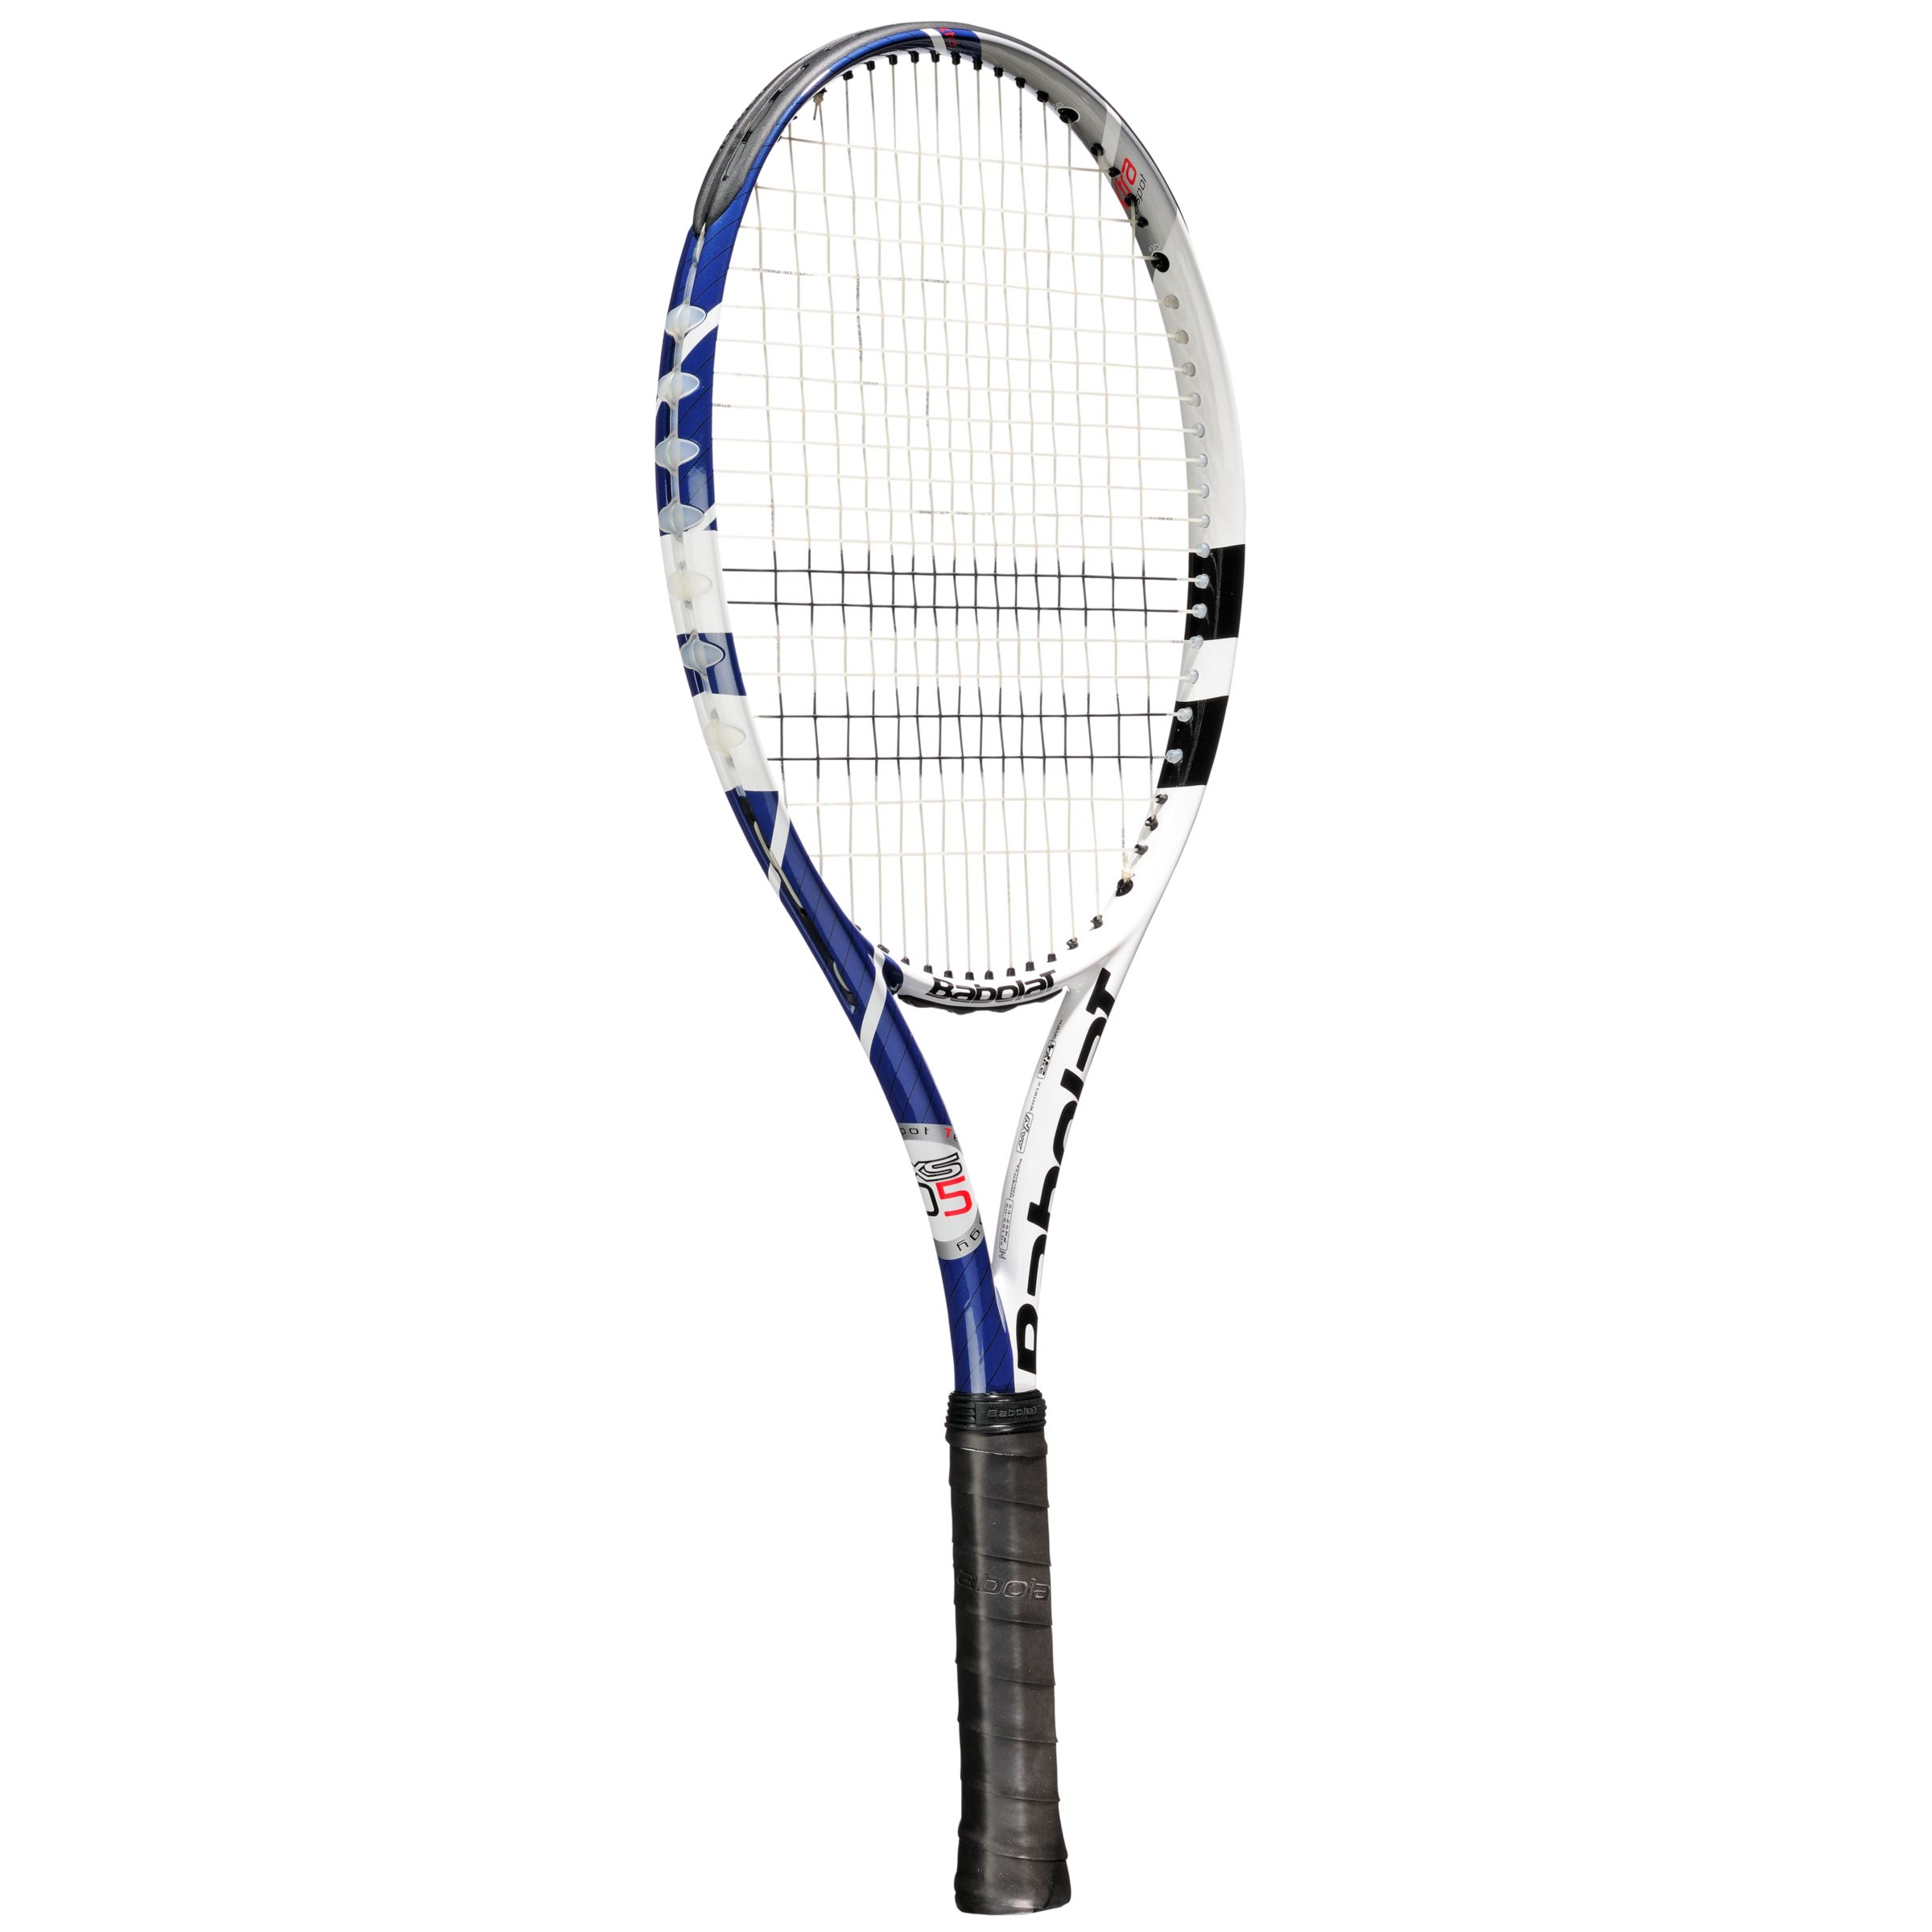 Babolat XS 105 Intermediate Tennis Racket, Grip 3